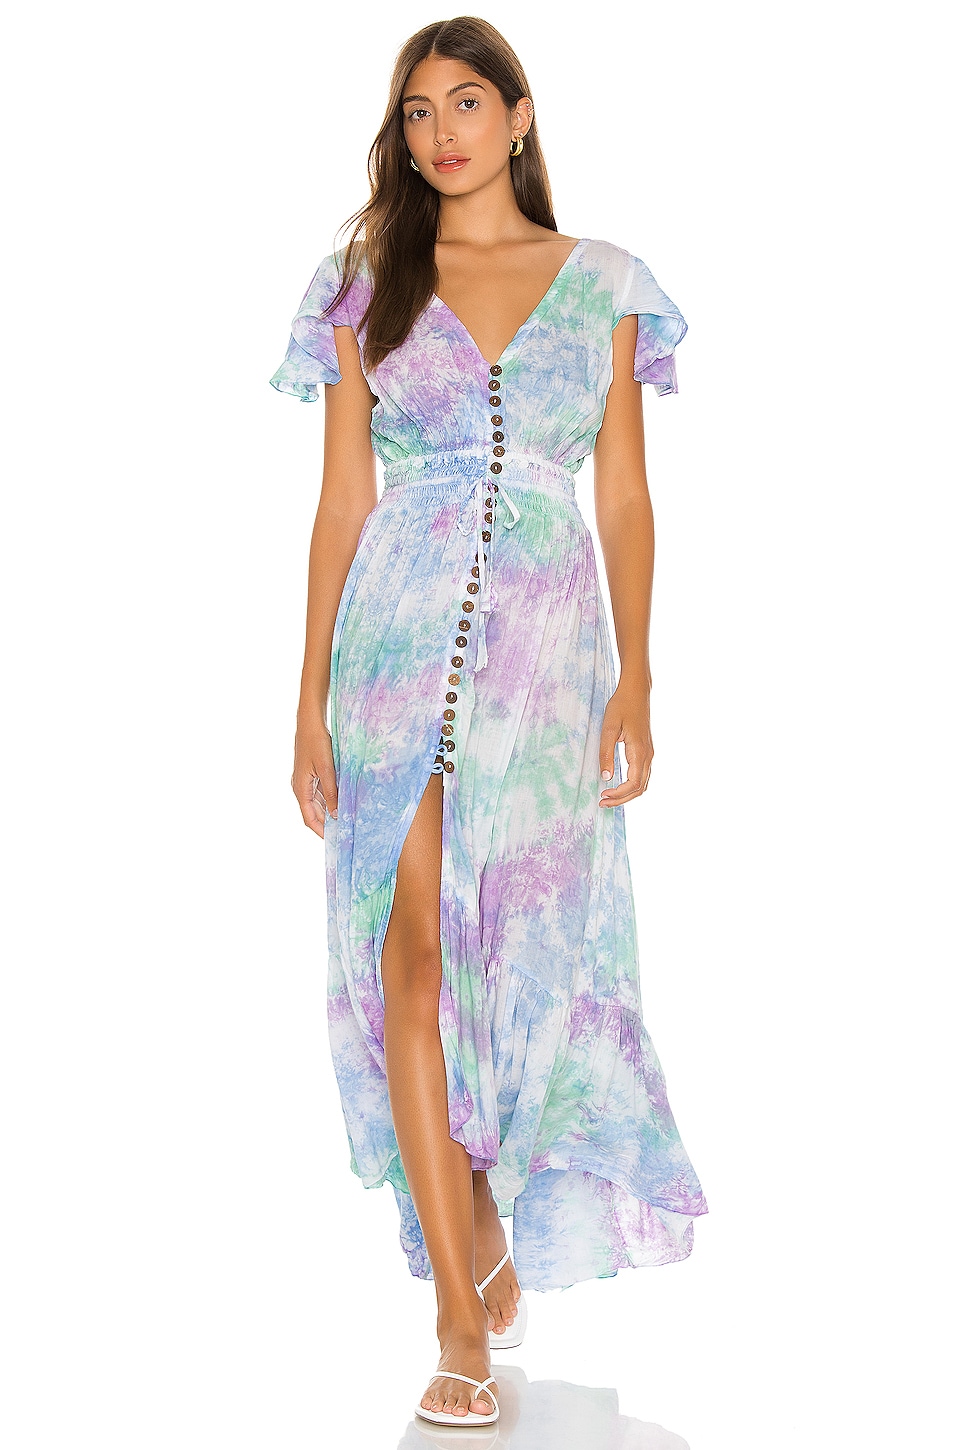 Tiare Hawaii New Moon Maxi Dress in Dusty Rose & White Gradasi | REVOLVE